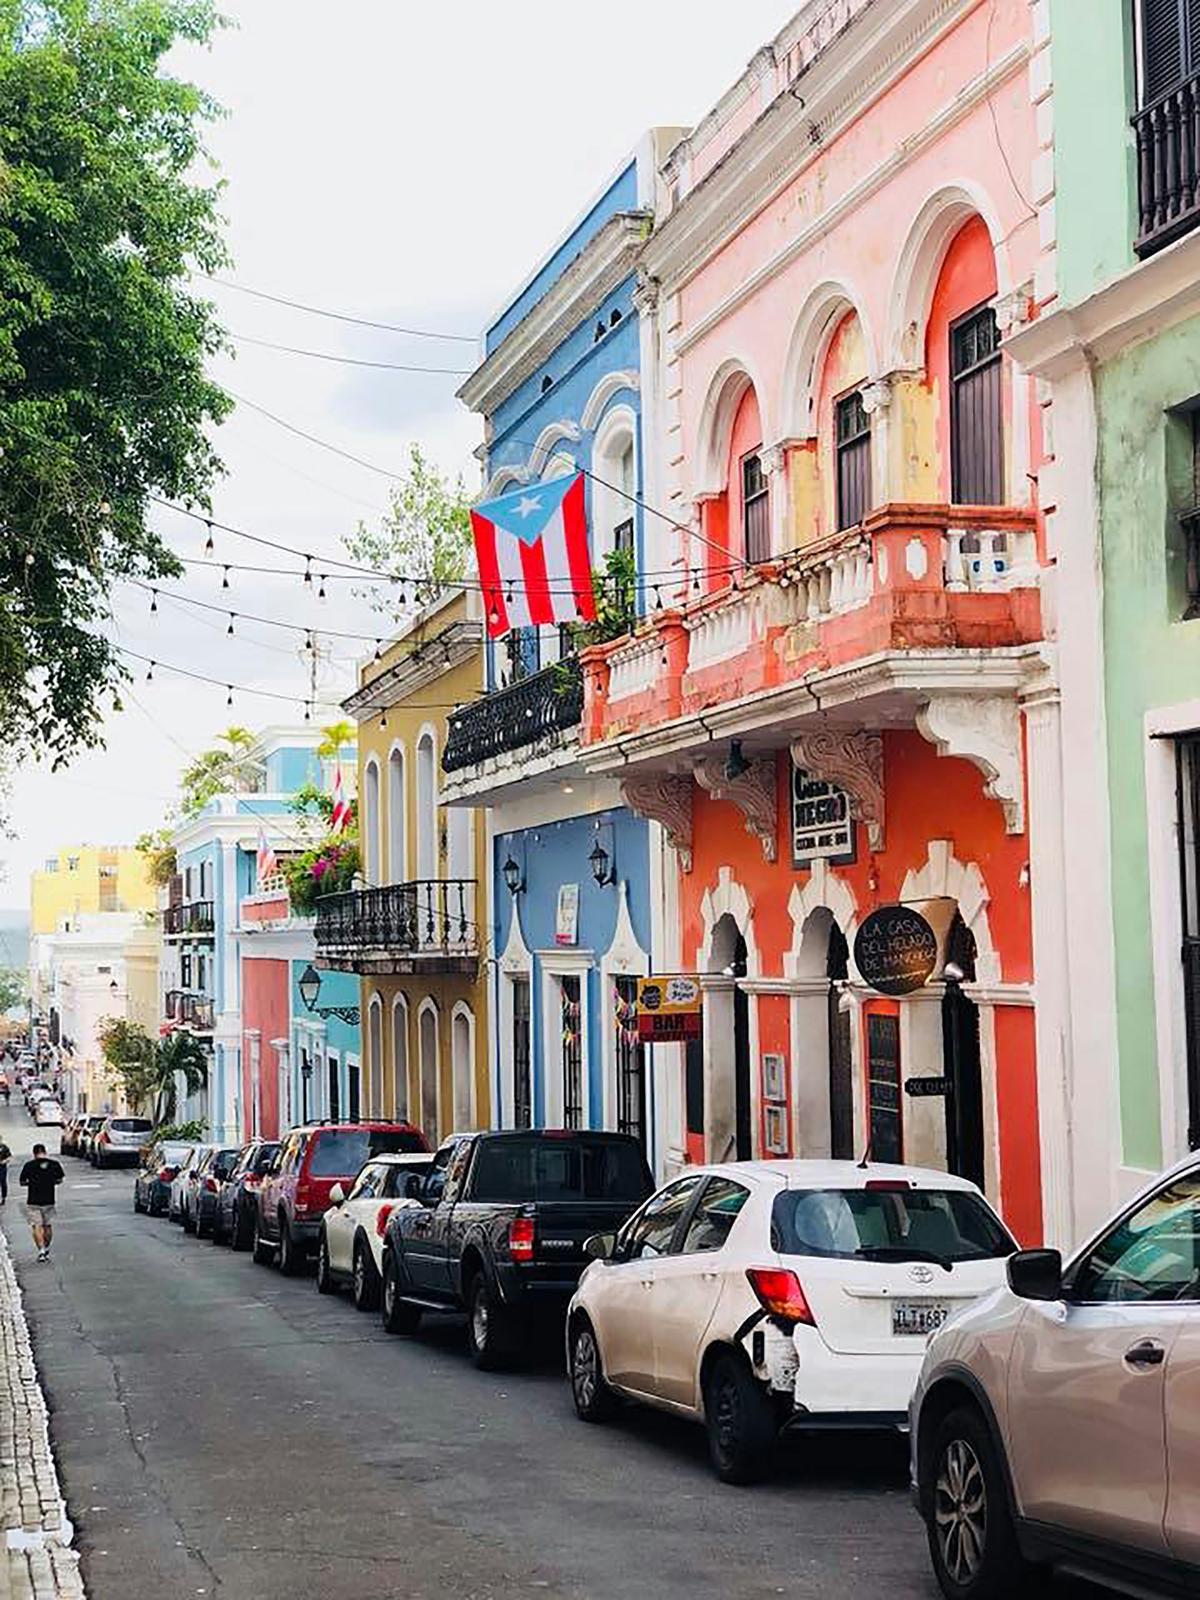 Colorful houses adorn the cobblestone streets of Old San Juan. (Alex George/Unsplash)